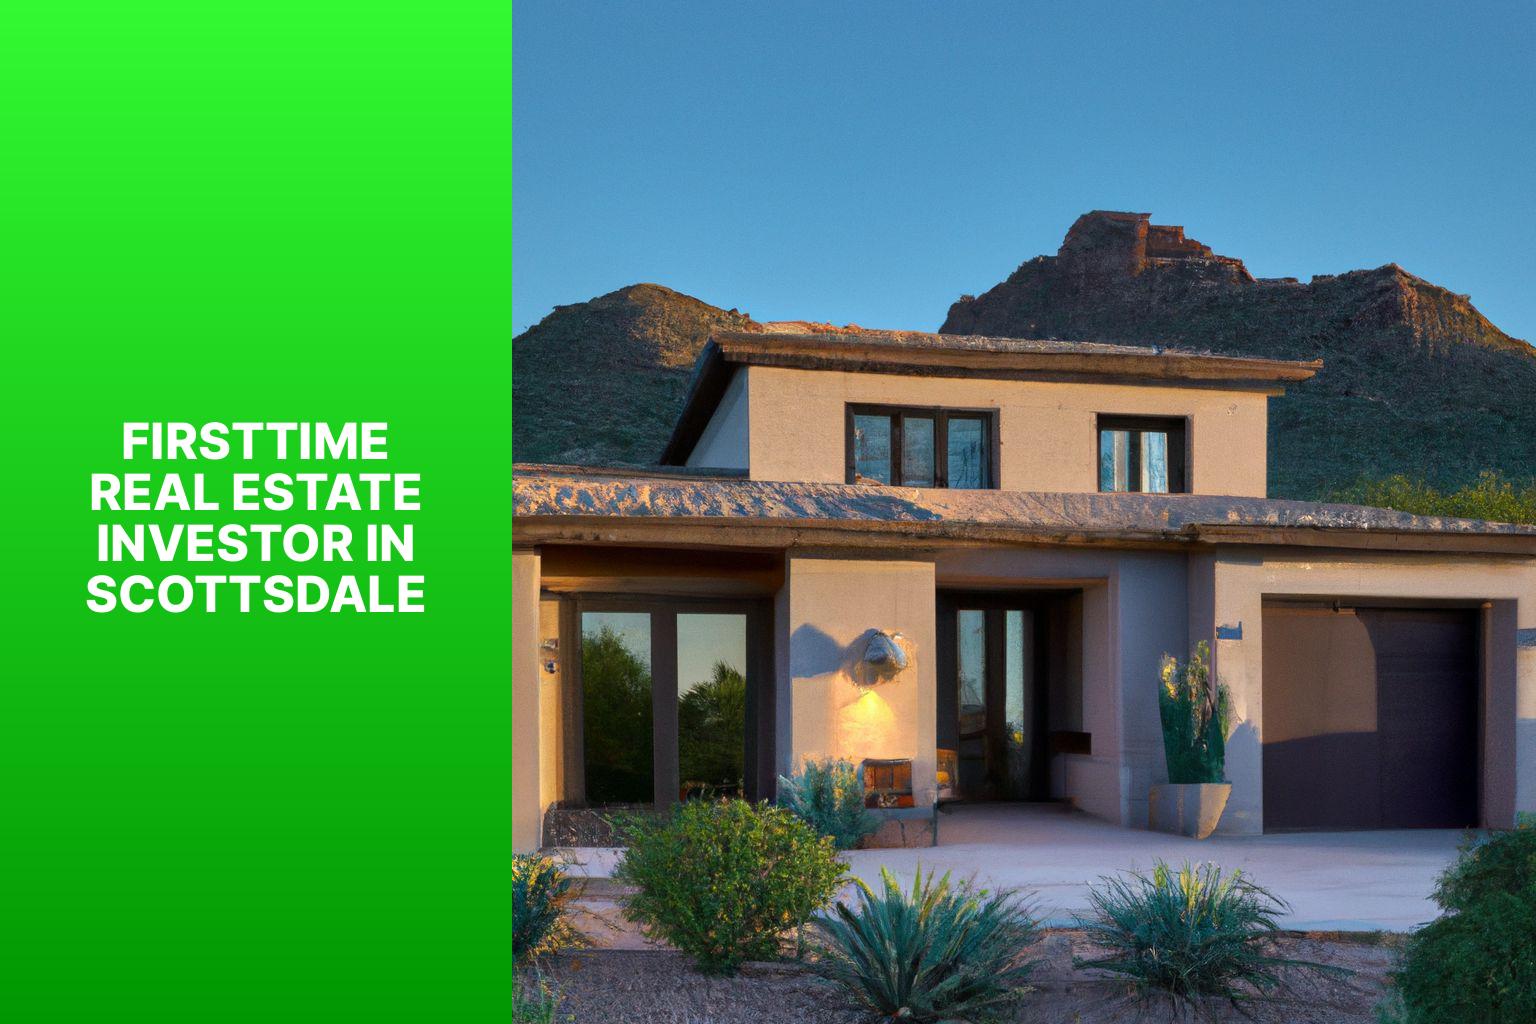 Firsttime real estate investor in Scottsdale